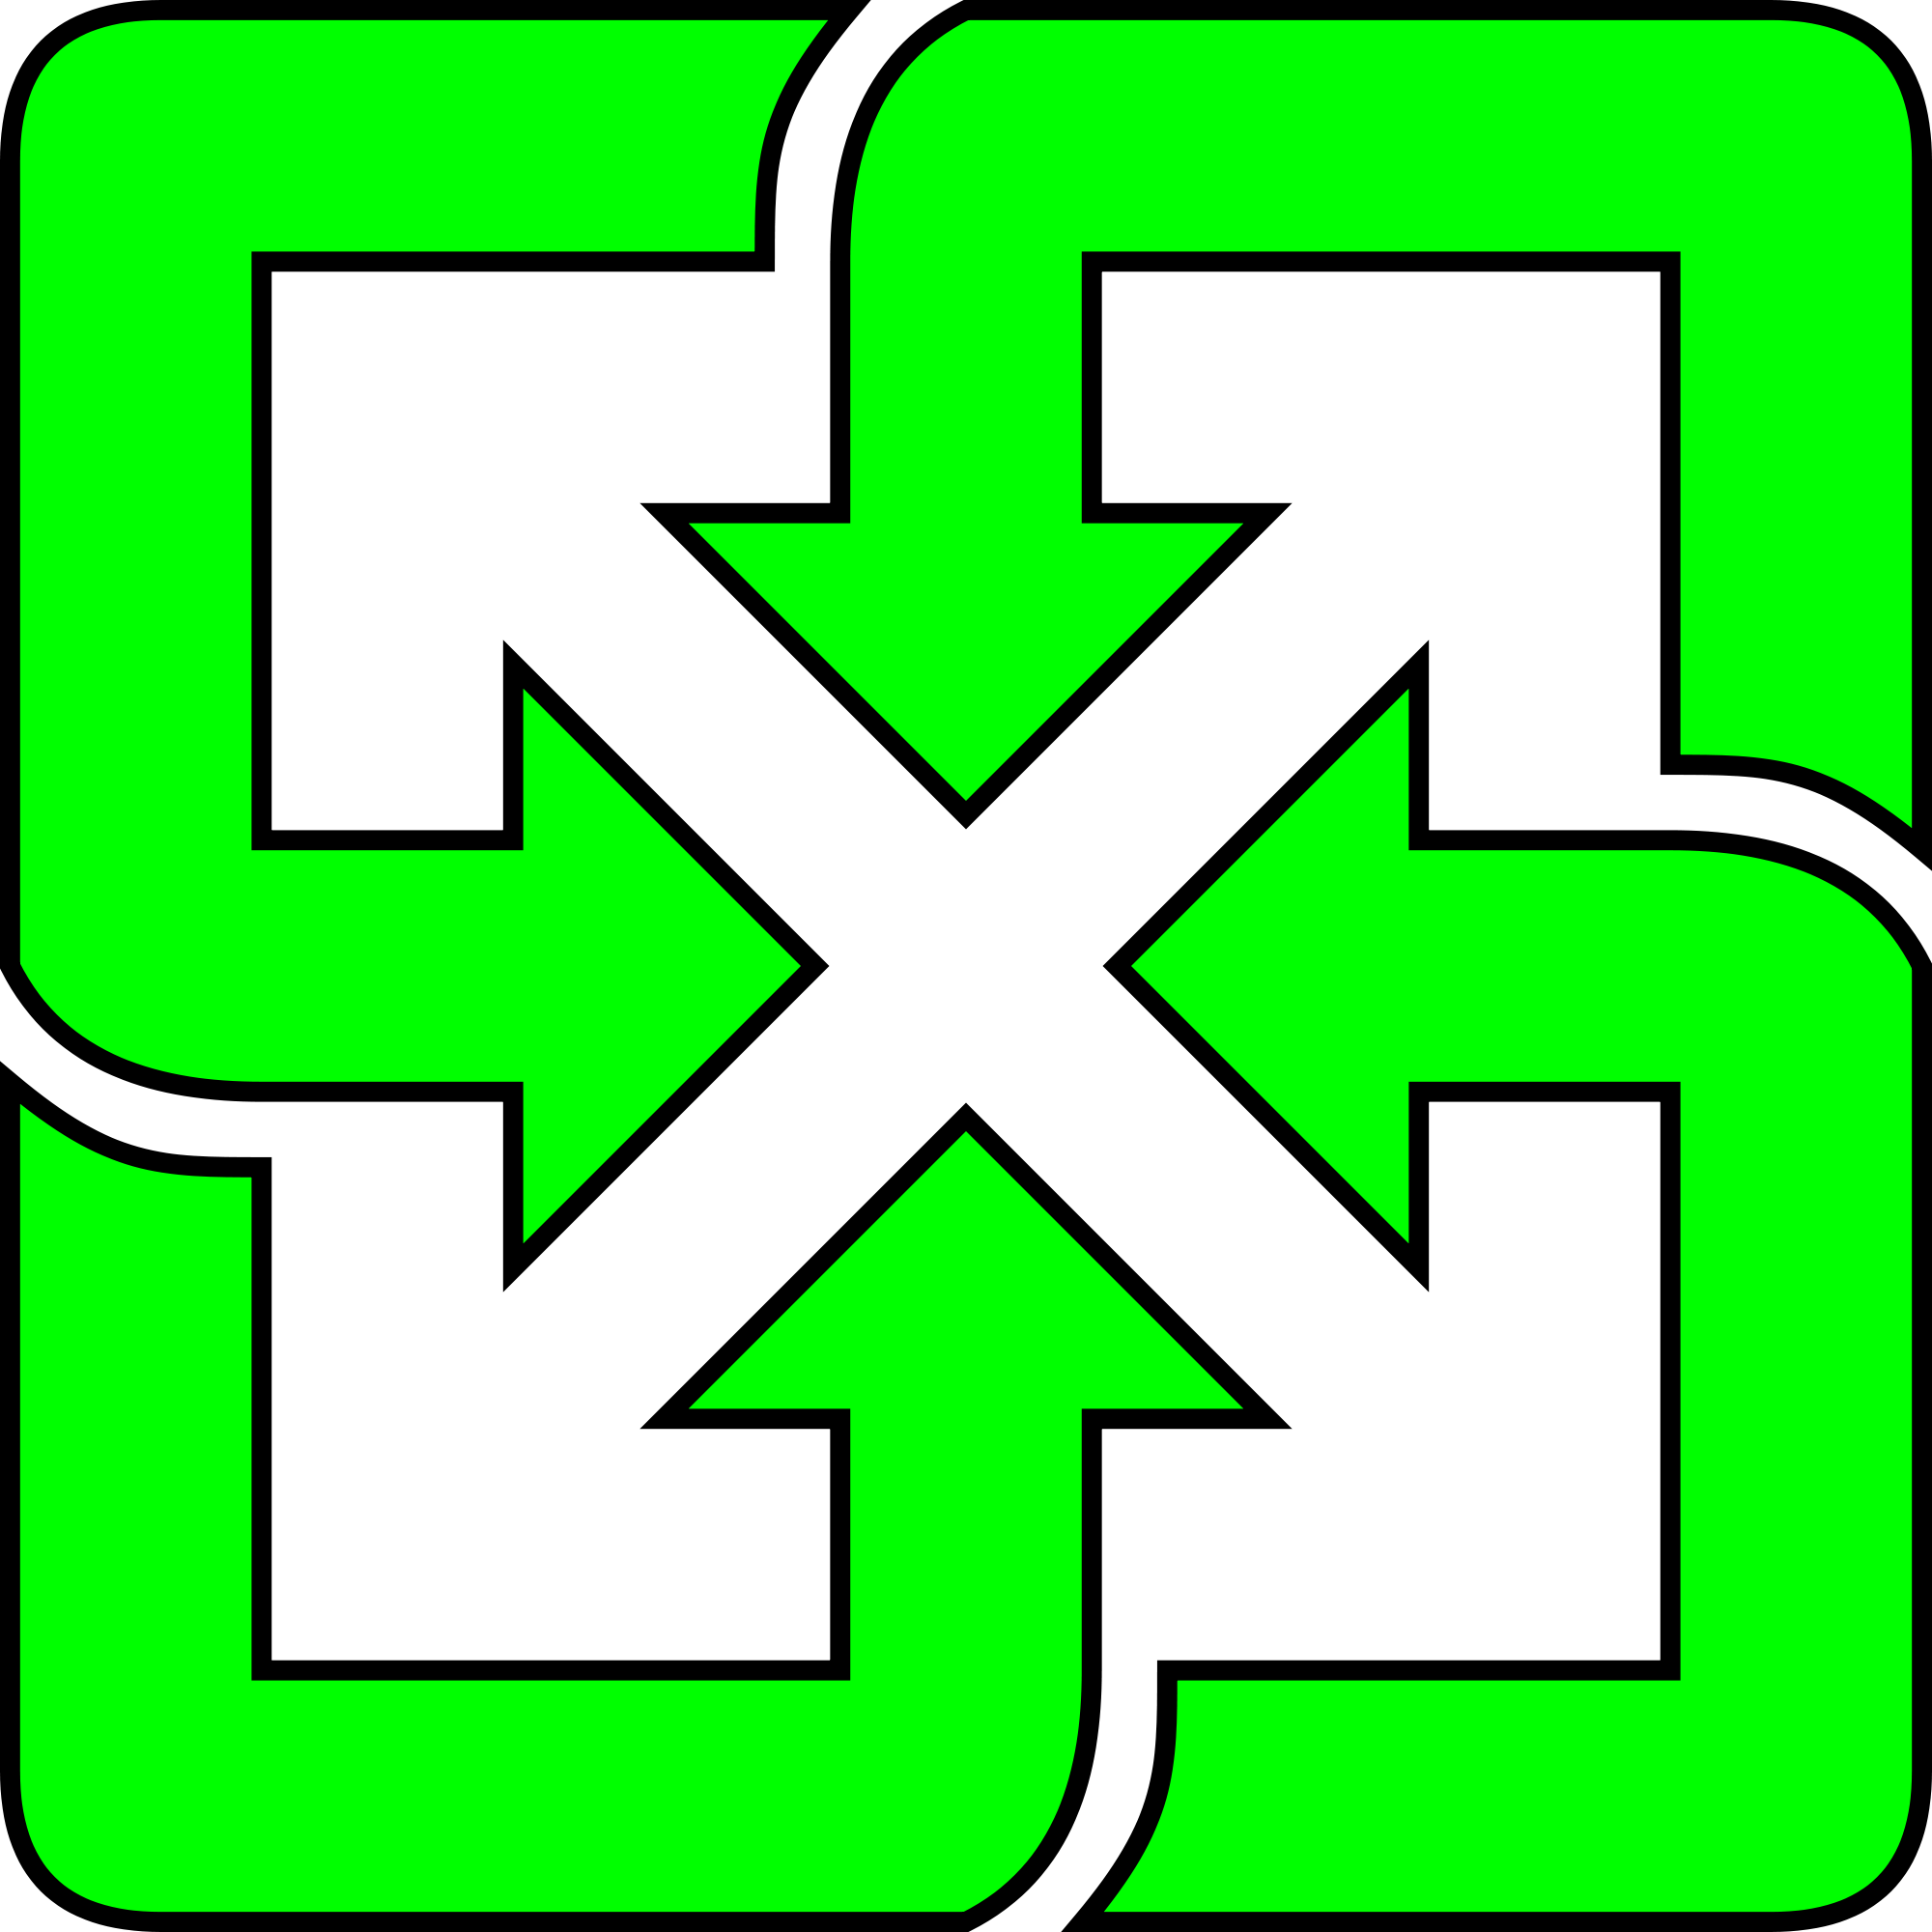 Recycling symbol - Wikipedia, the free encyclopedia